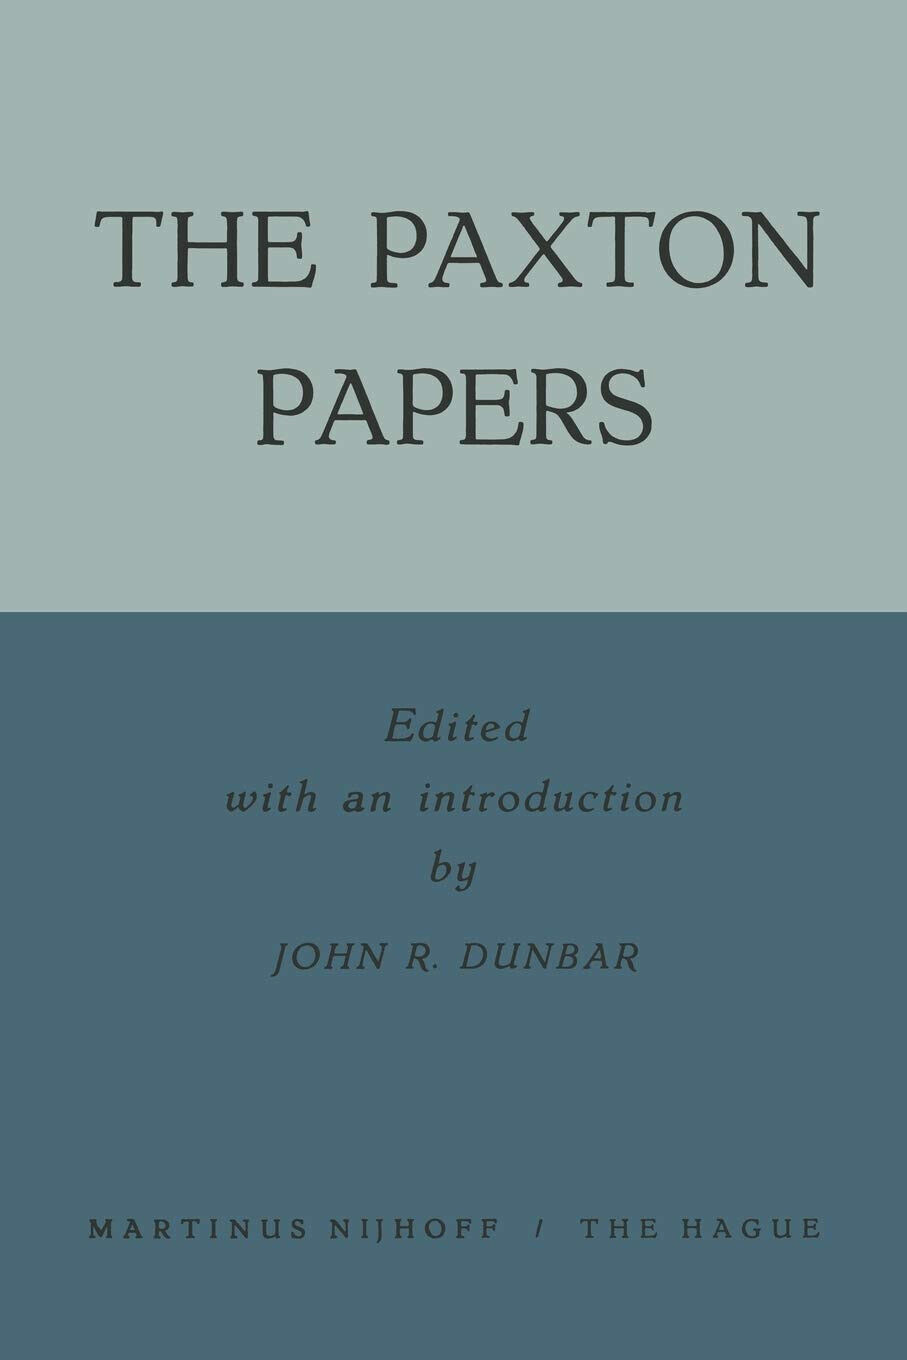 The Paxton Papers - John R. Dunbar - Springer, 1957 libro usato